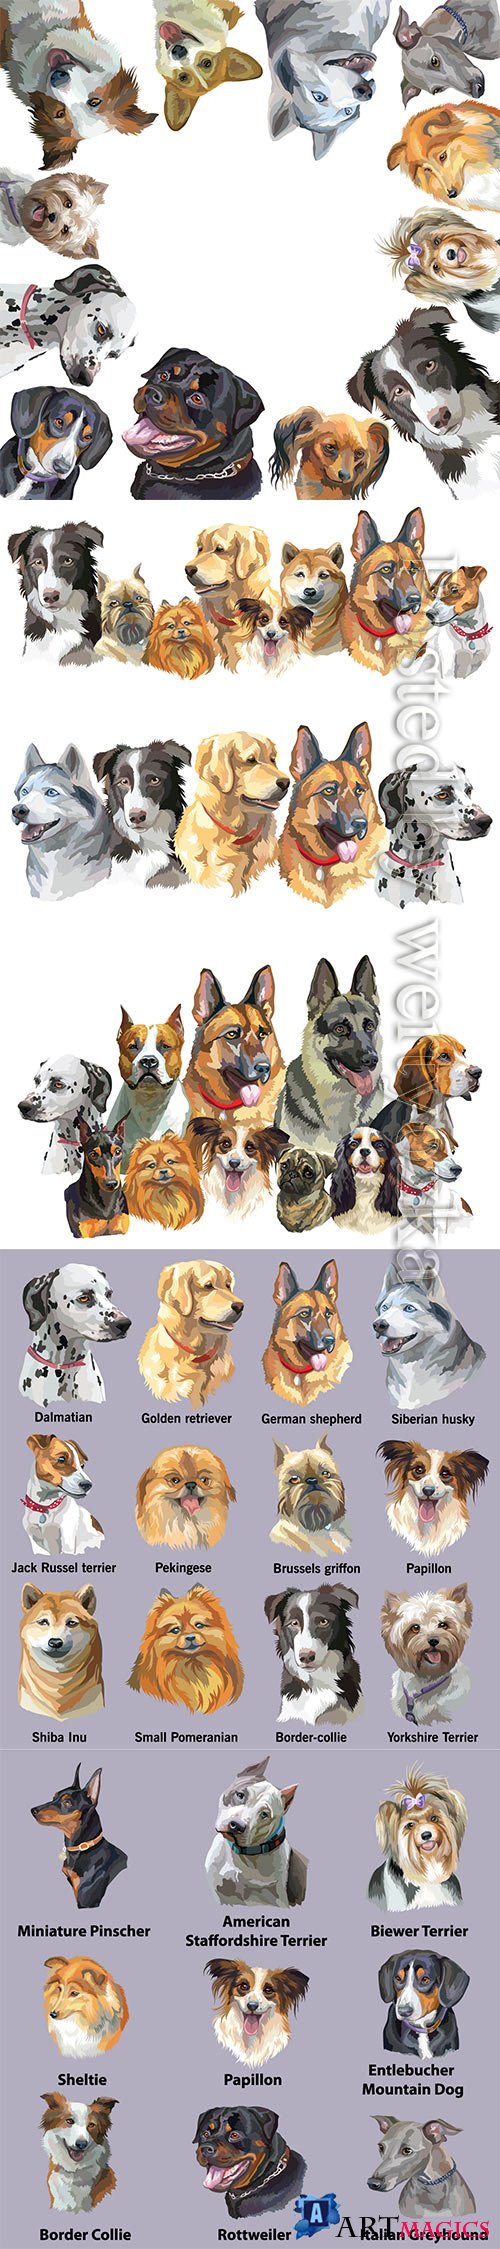 Set of portraits of dog breeds